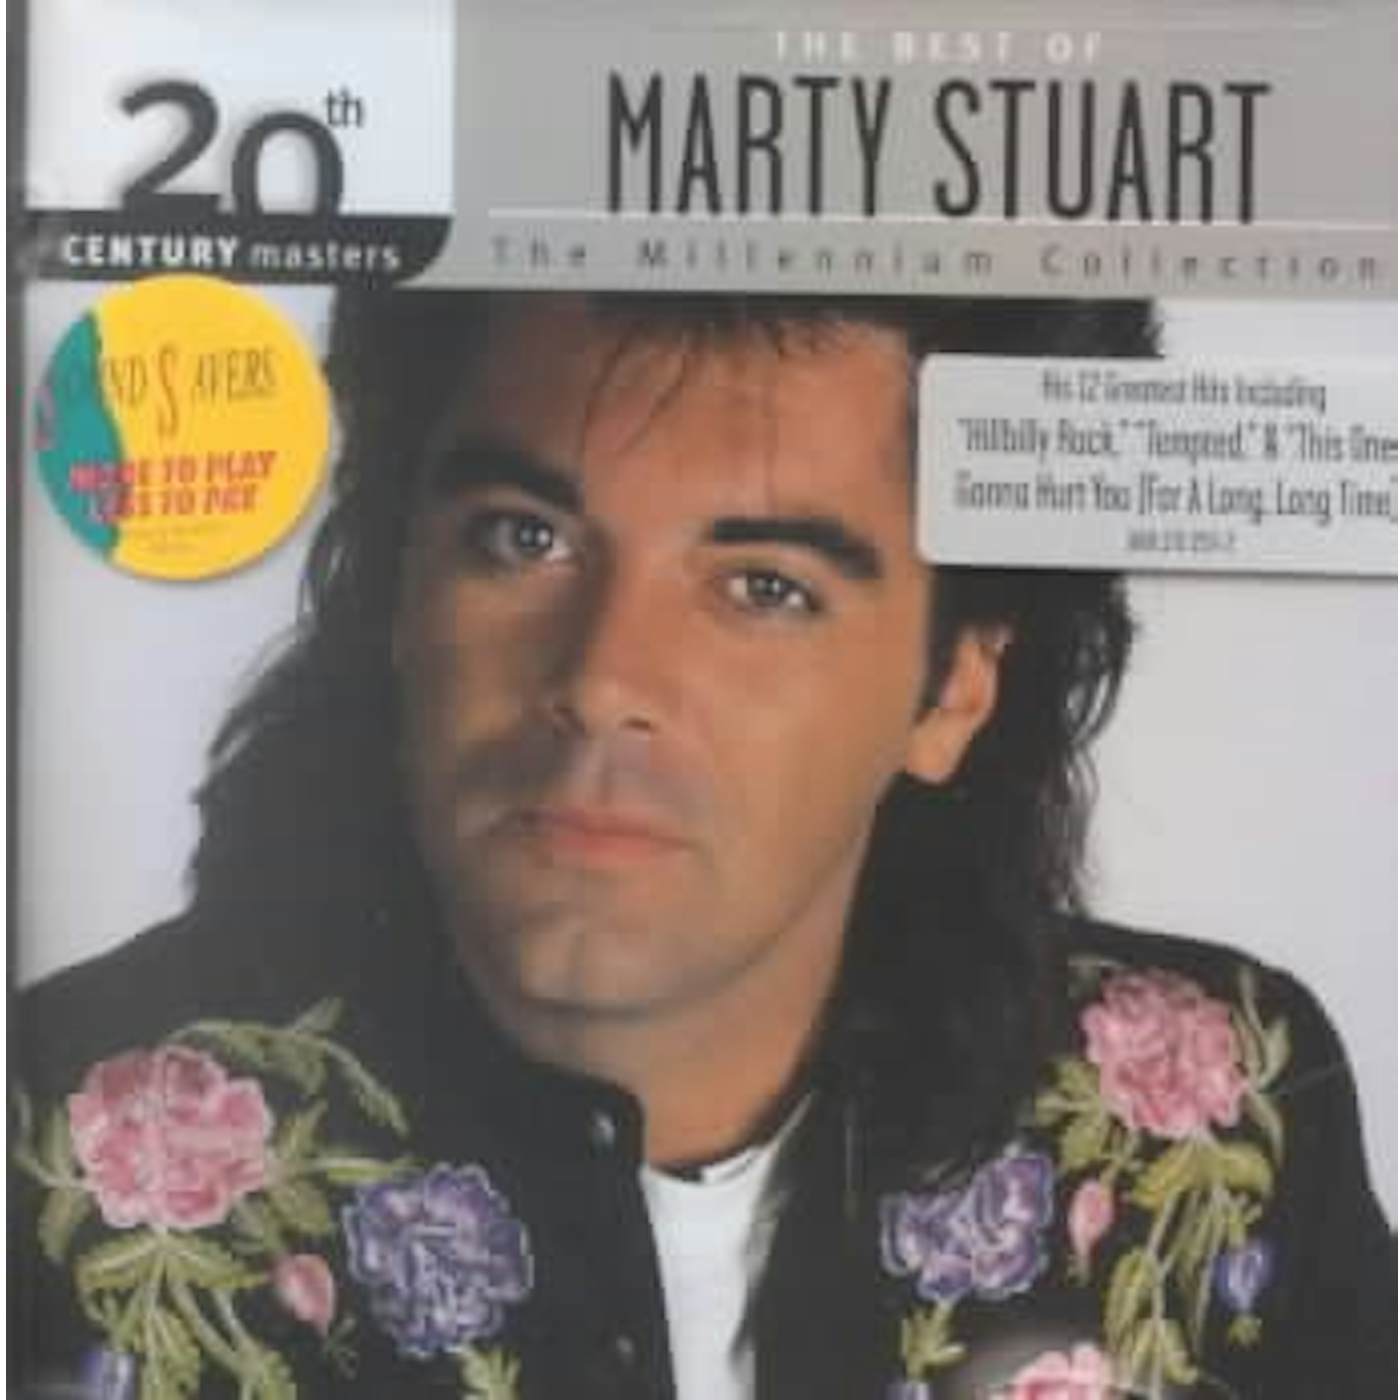 Marty Stuart Millennium Collection - 20th Century Masters CD